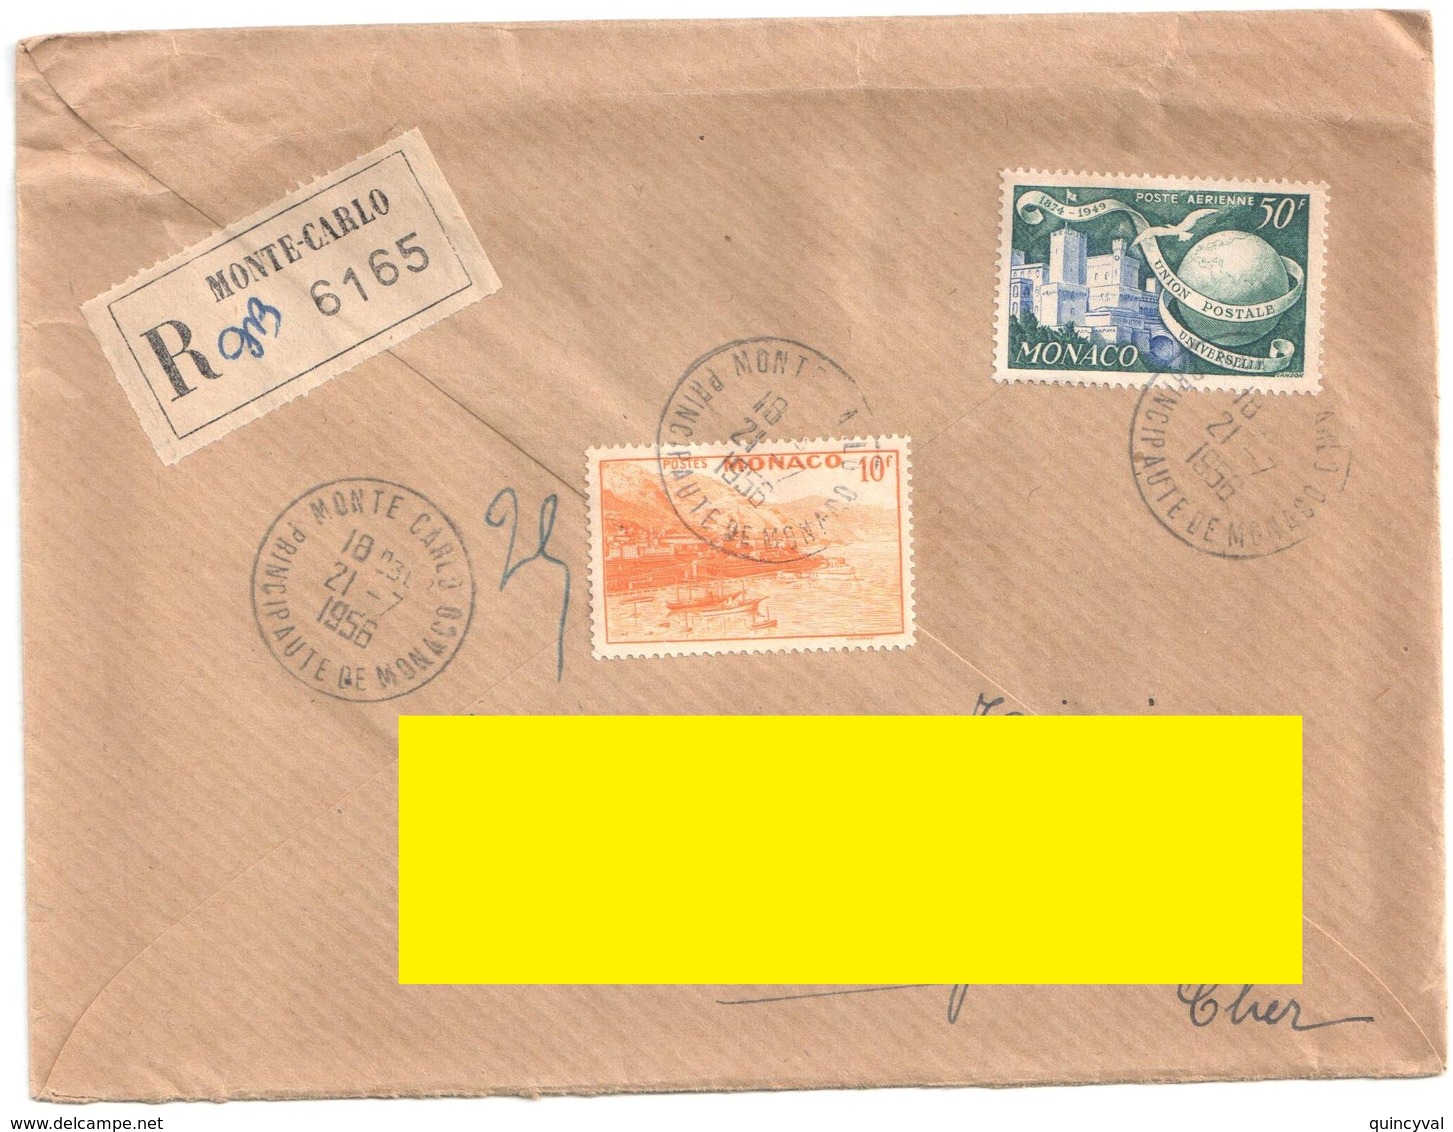 MONTE CARLO Lettre Recommandée Ob 21 7 1956 10 F Rade Jaune 50 FUPU Yv 311A PA47 - Briefe U. Dokumente